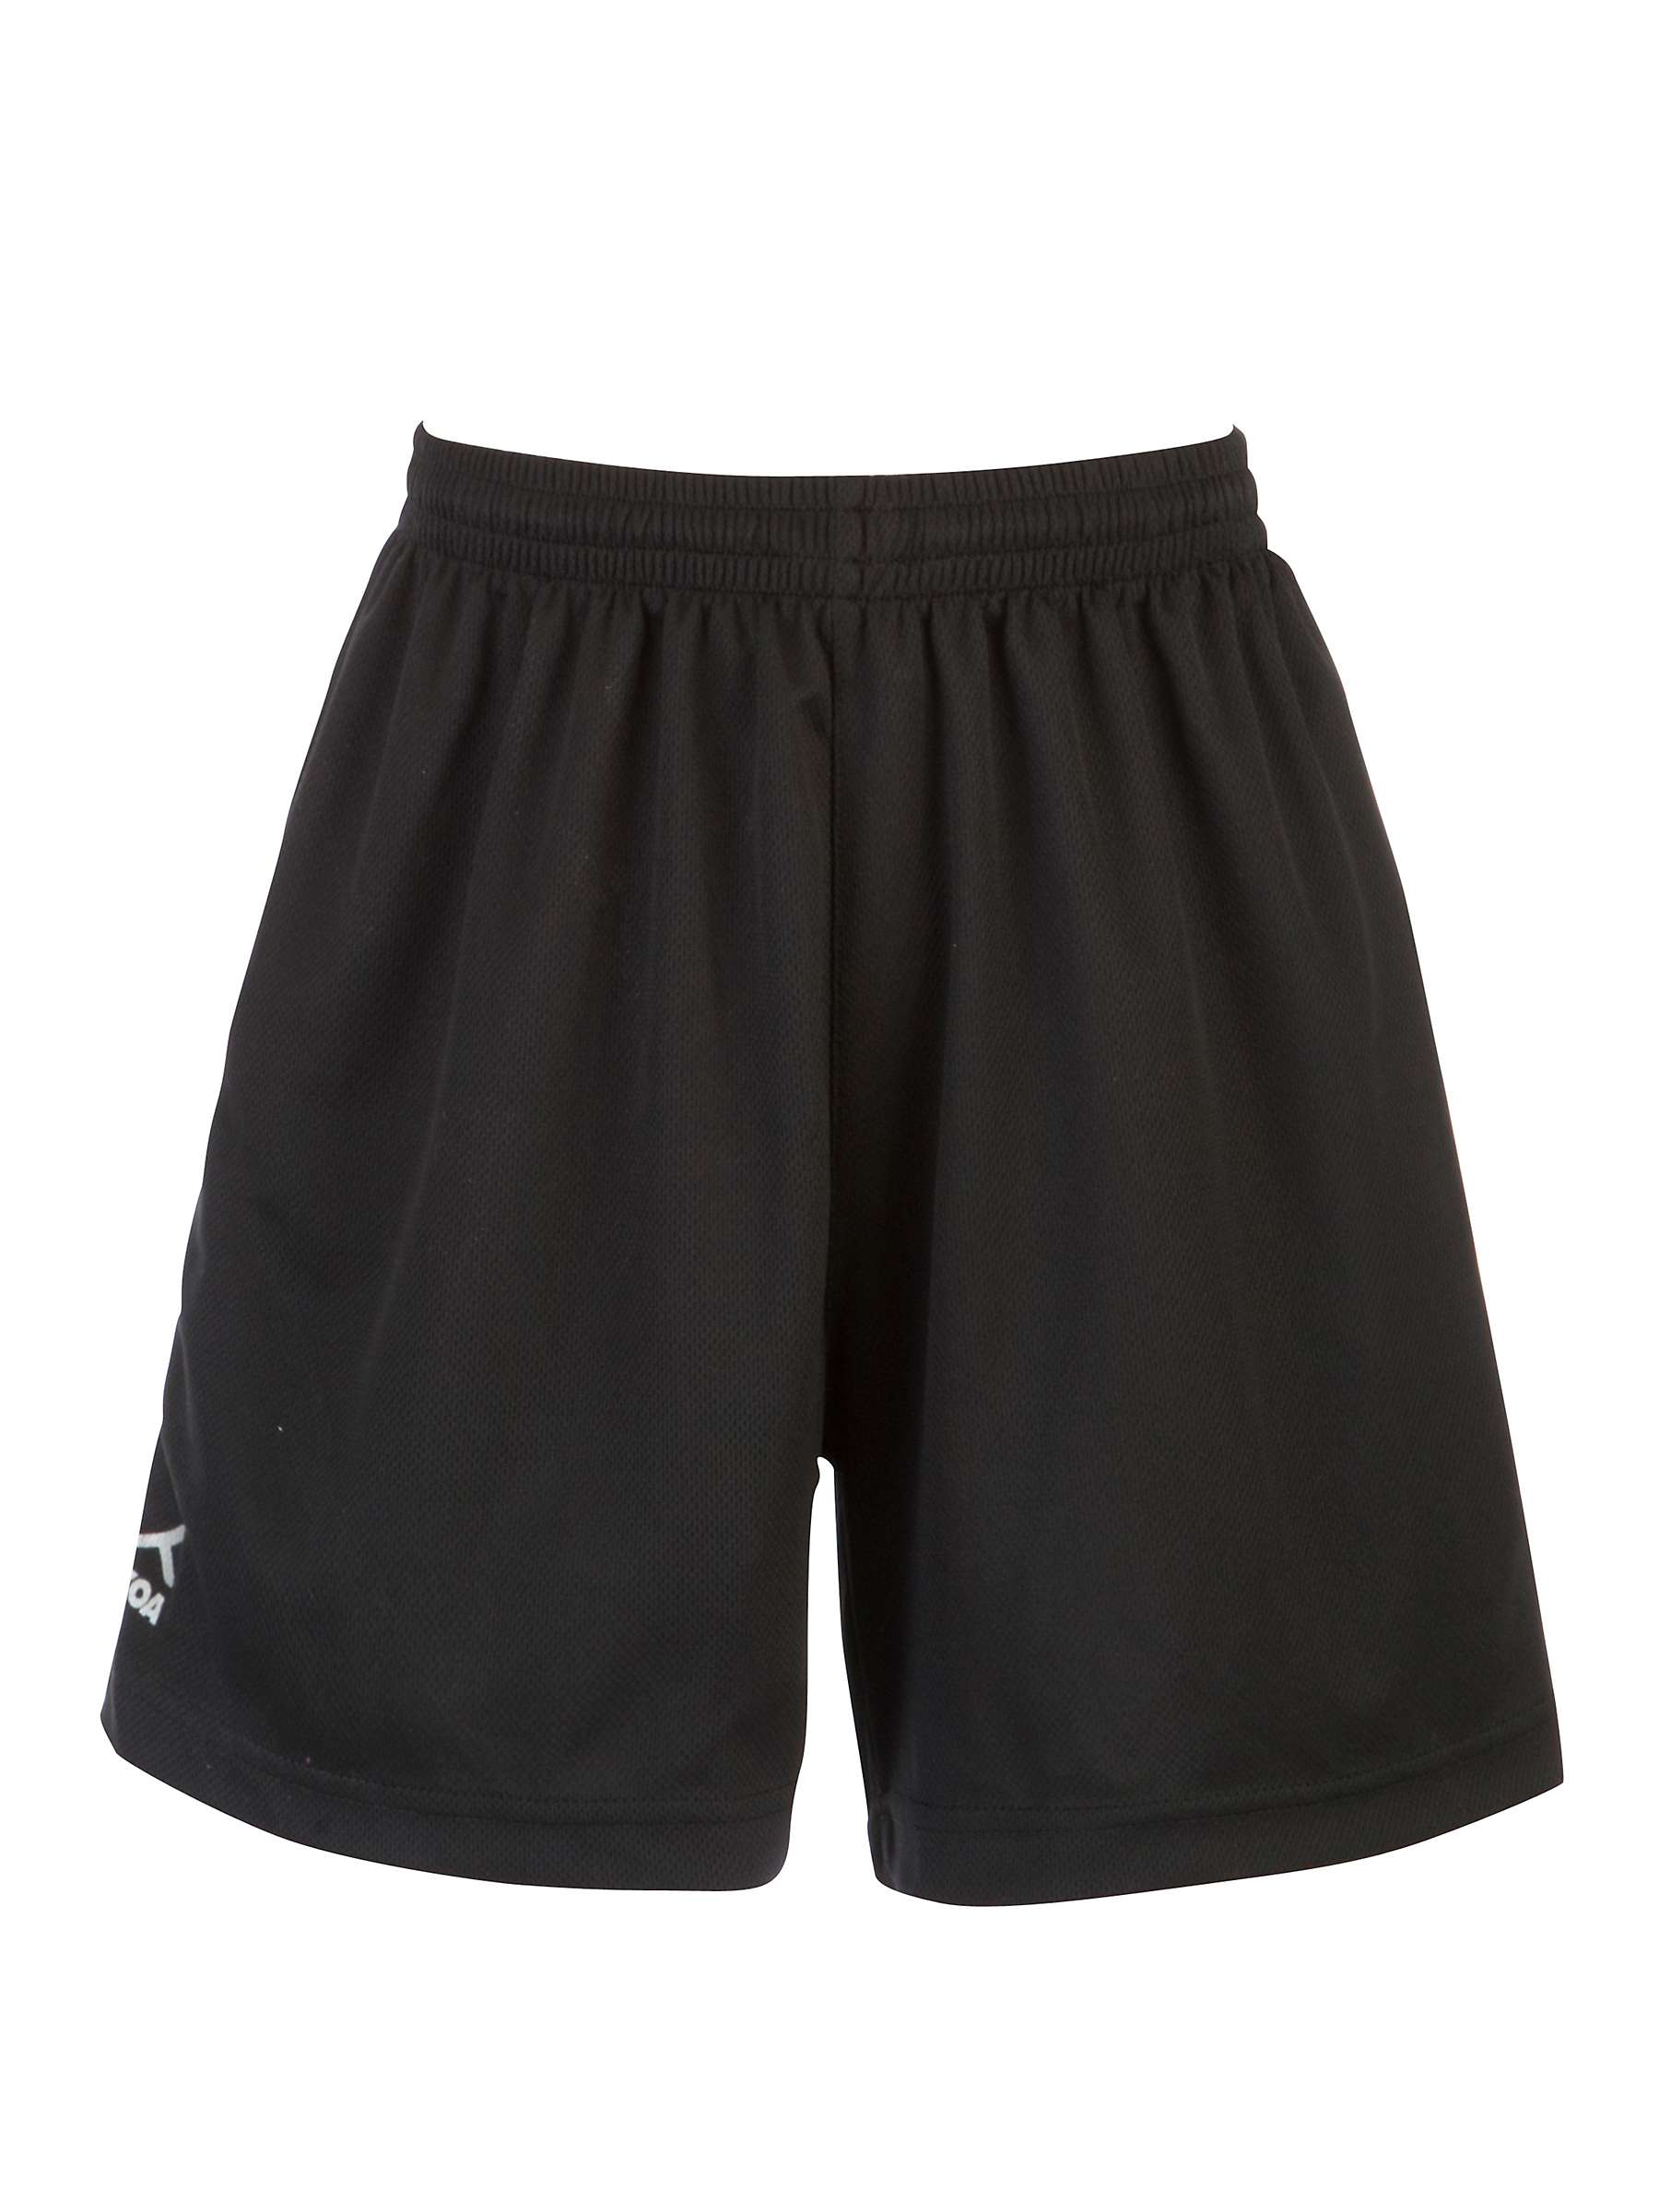 Buy School Sports Shorts, Black Online at johnlewis.com